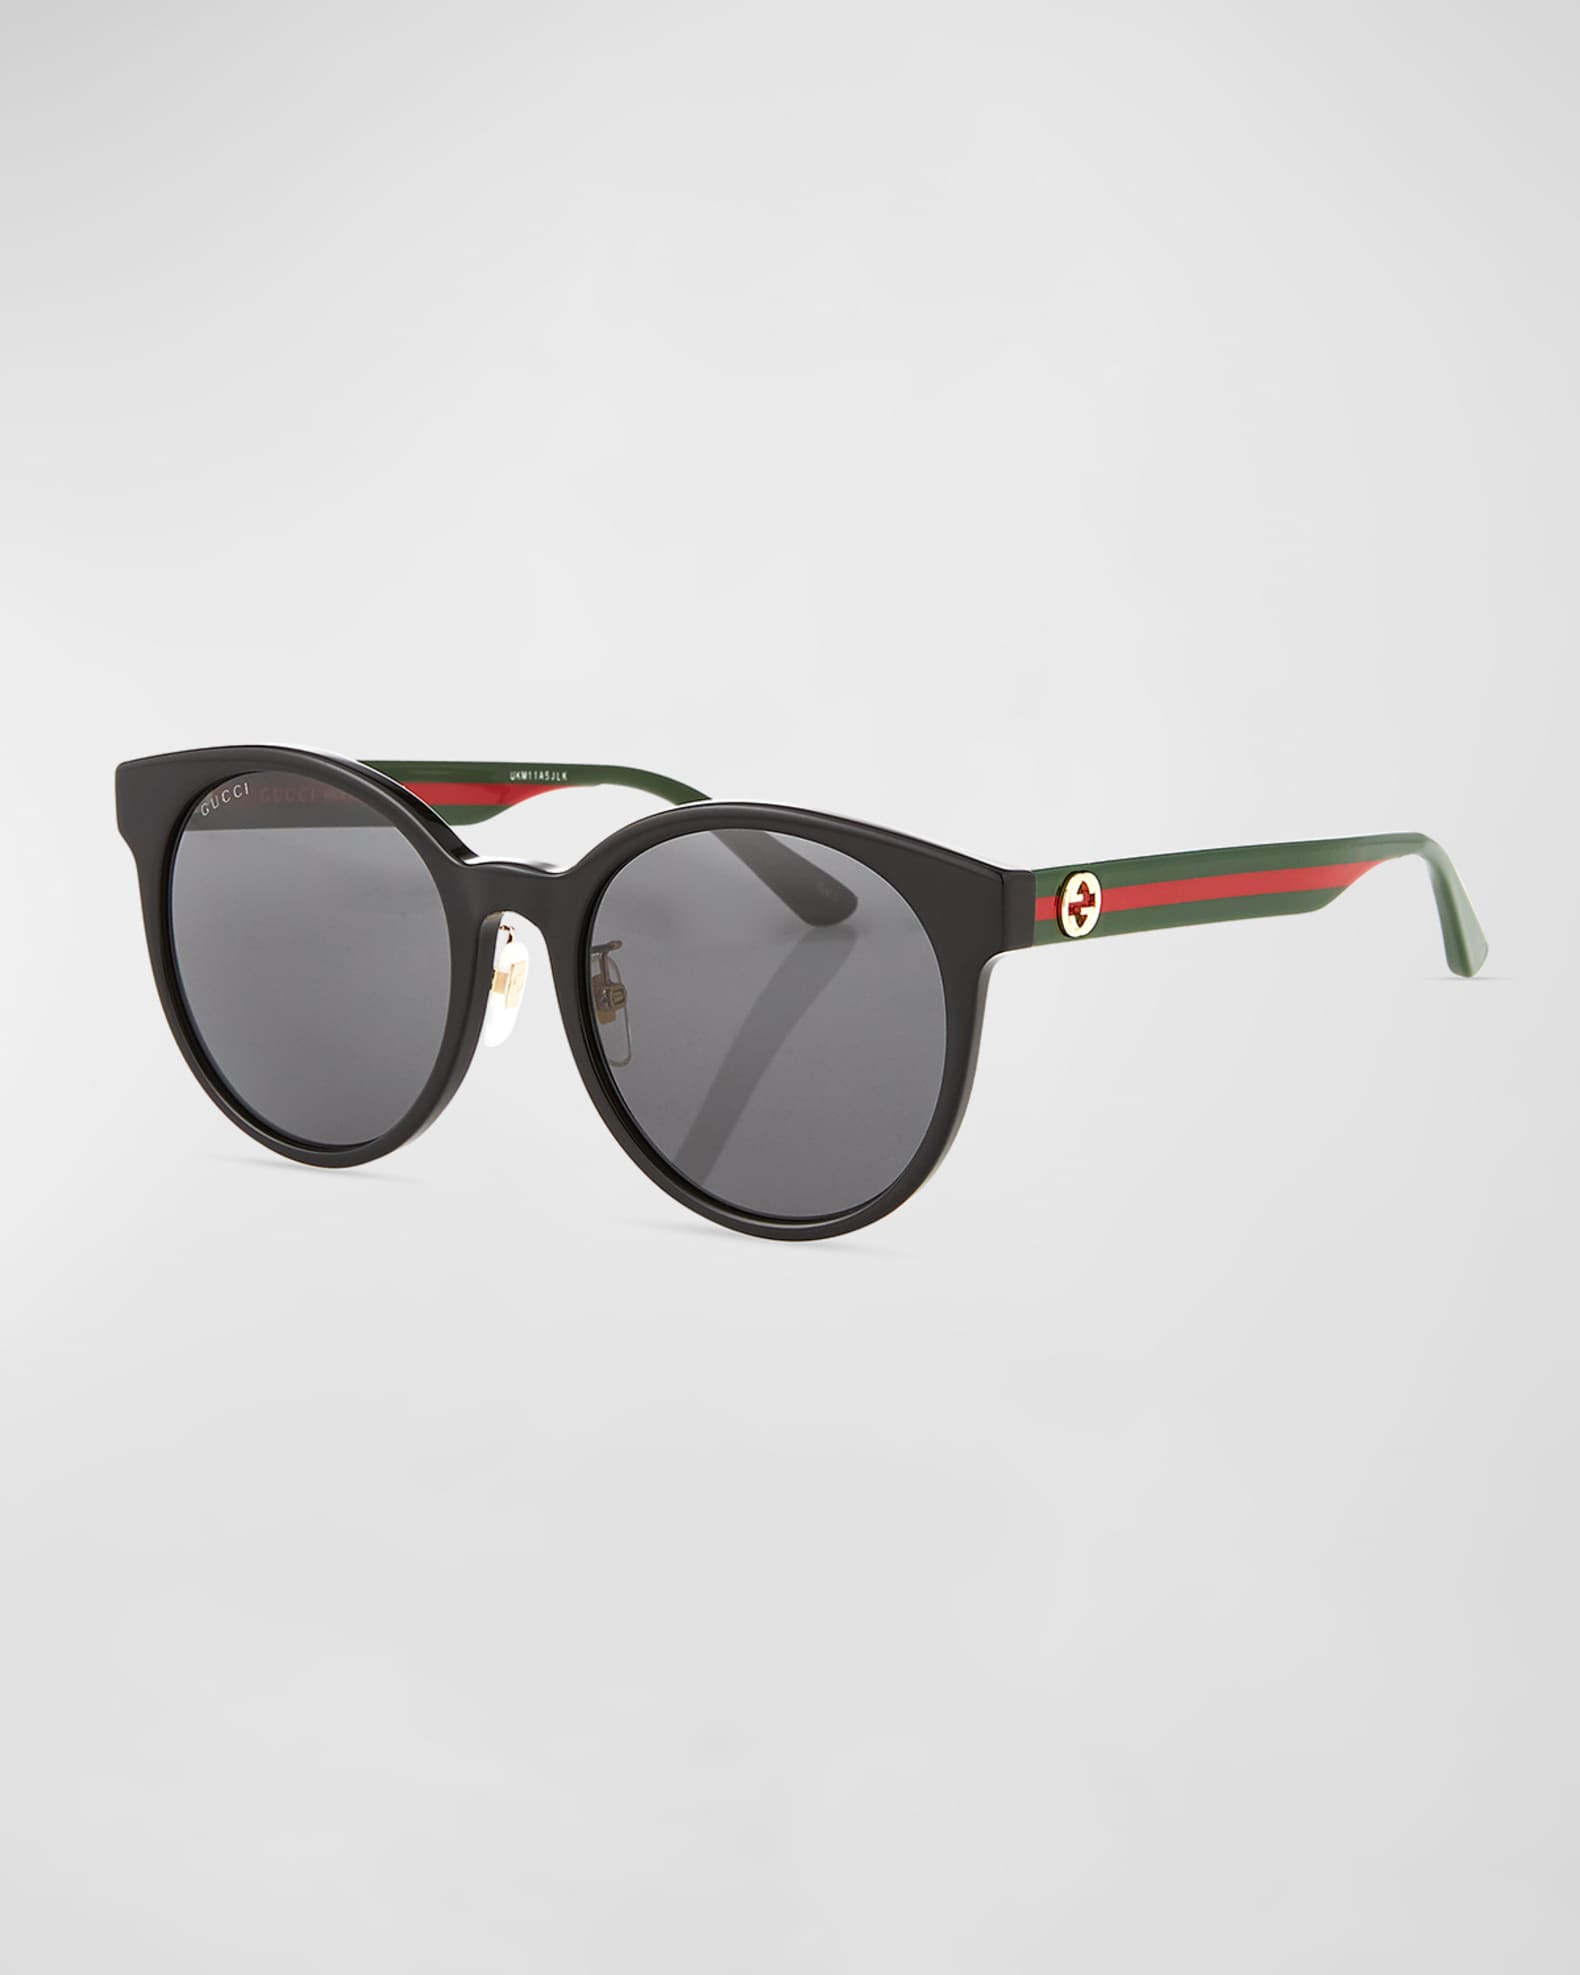 Gucci Round Web Arms Acetate Sunglasses Neiman Marcus